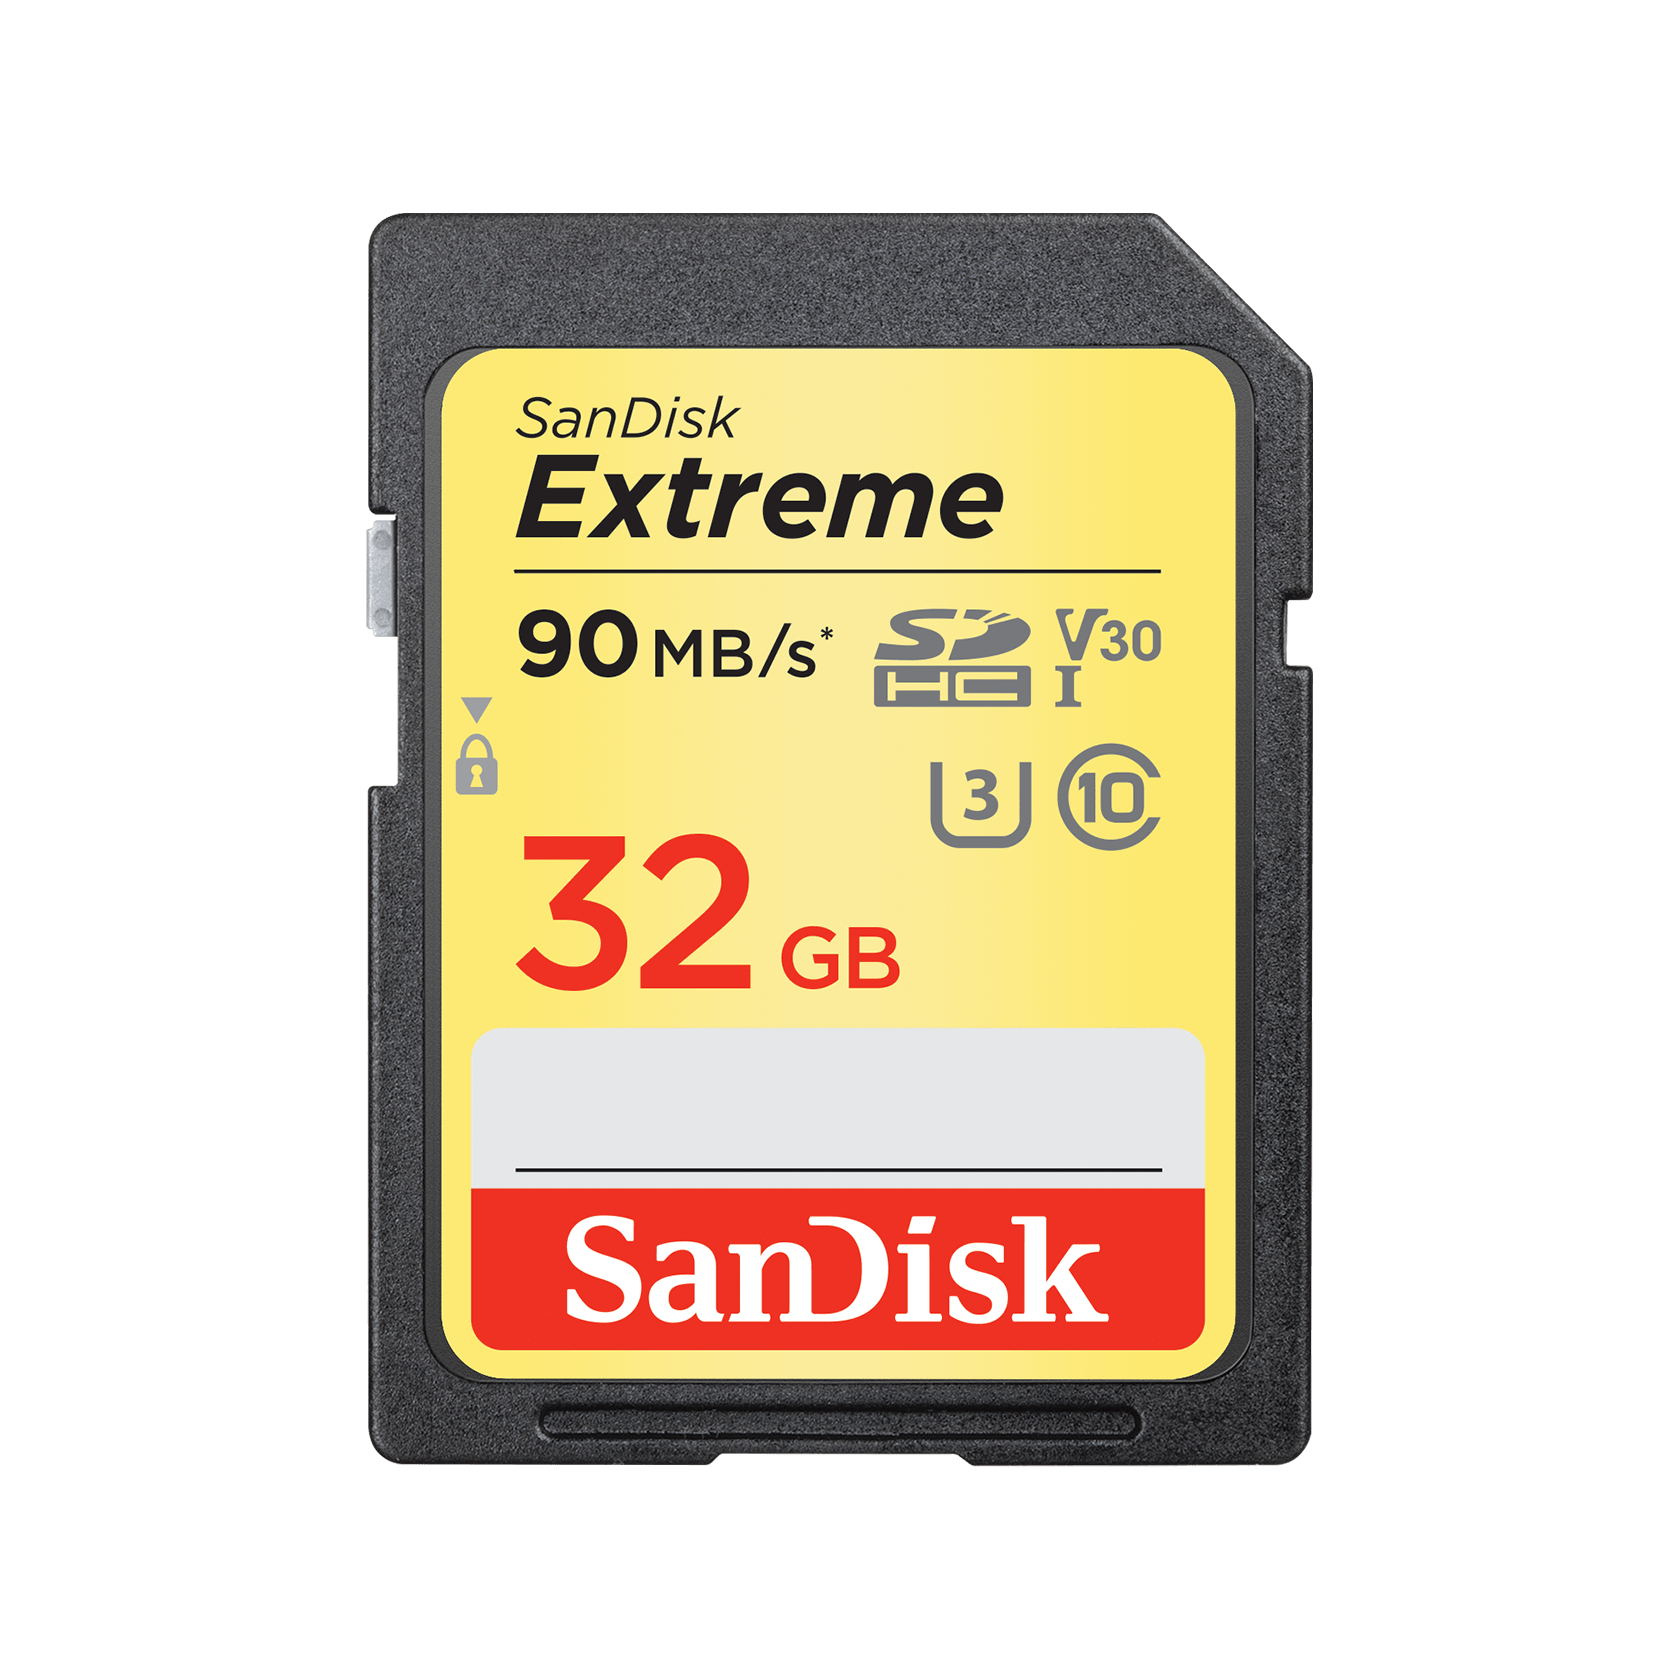 Sandisk Extreme Sd Uhs I Card Western Digital Store